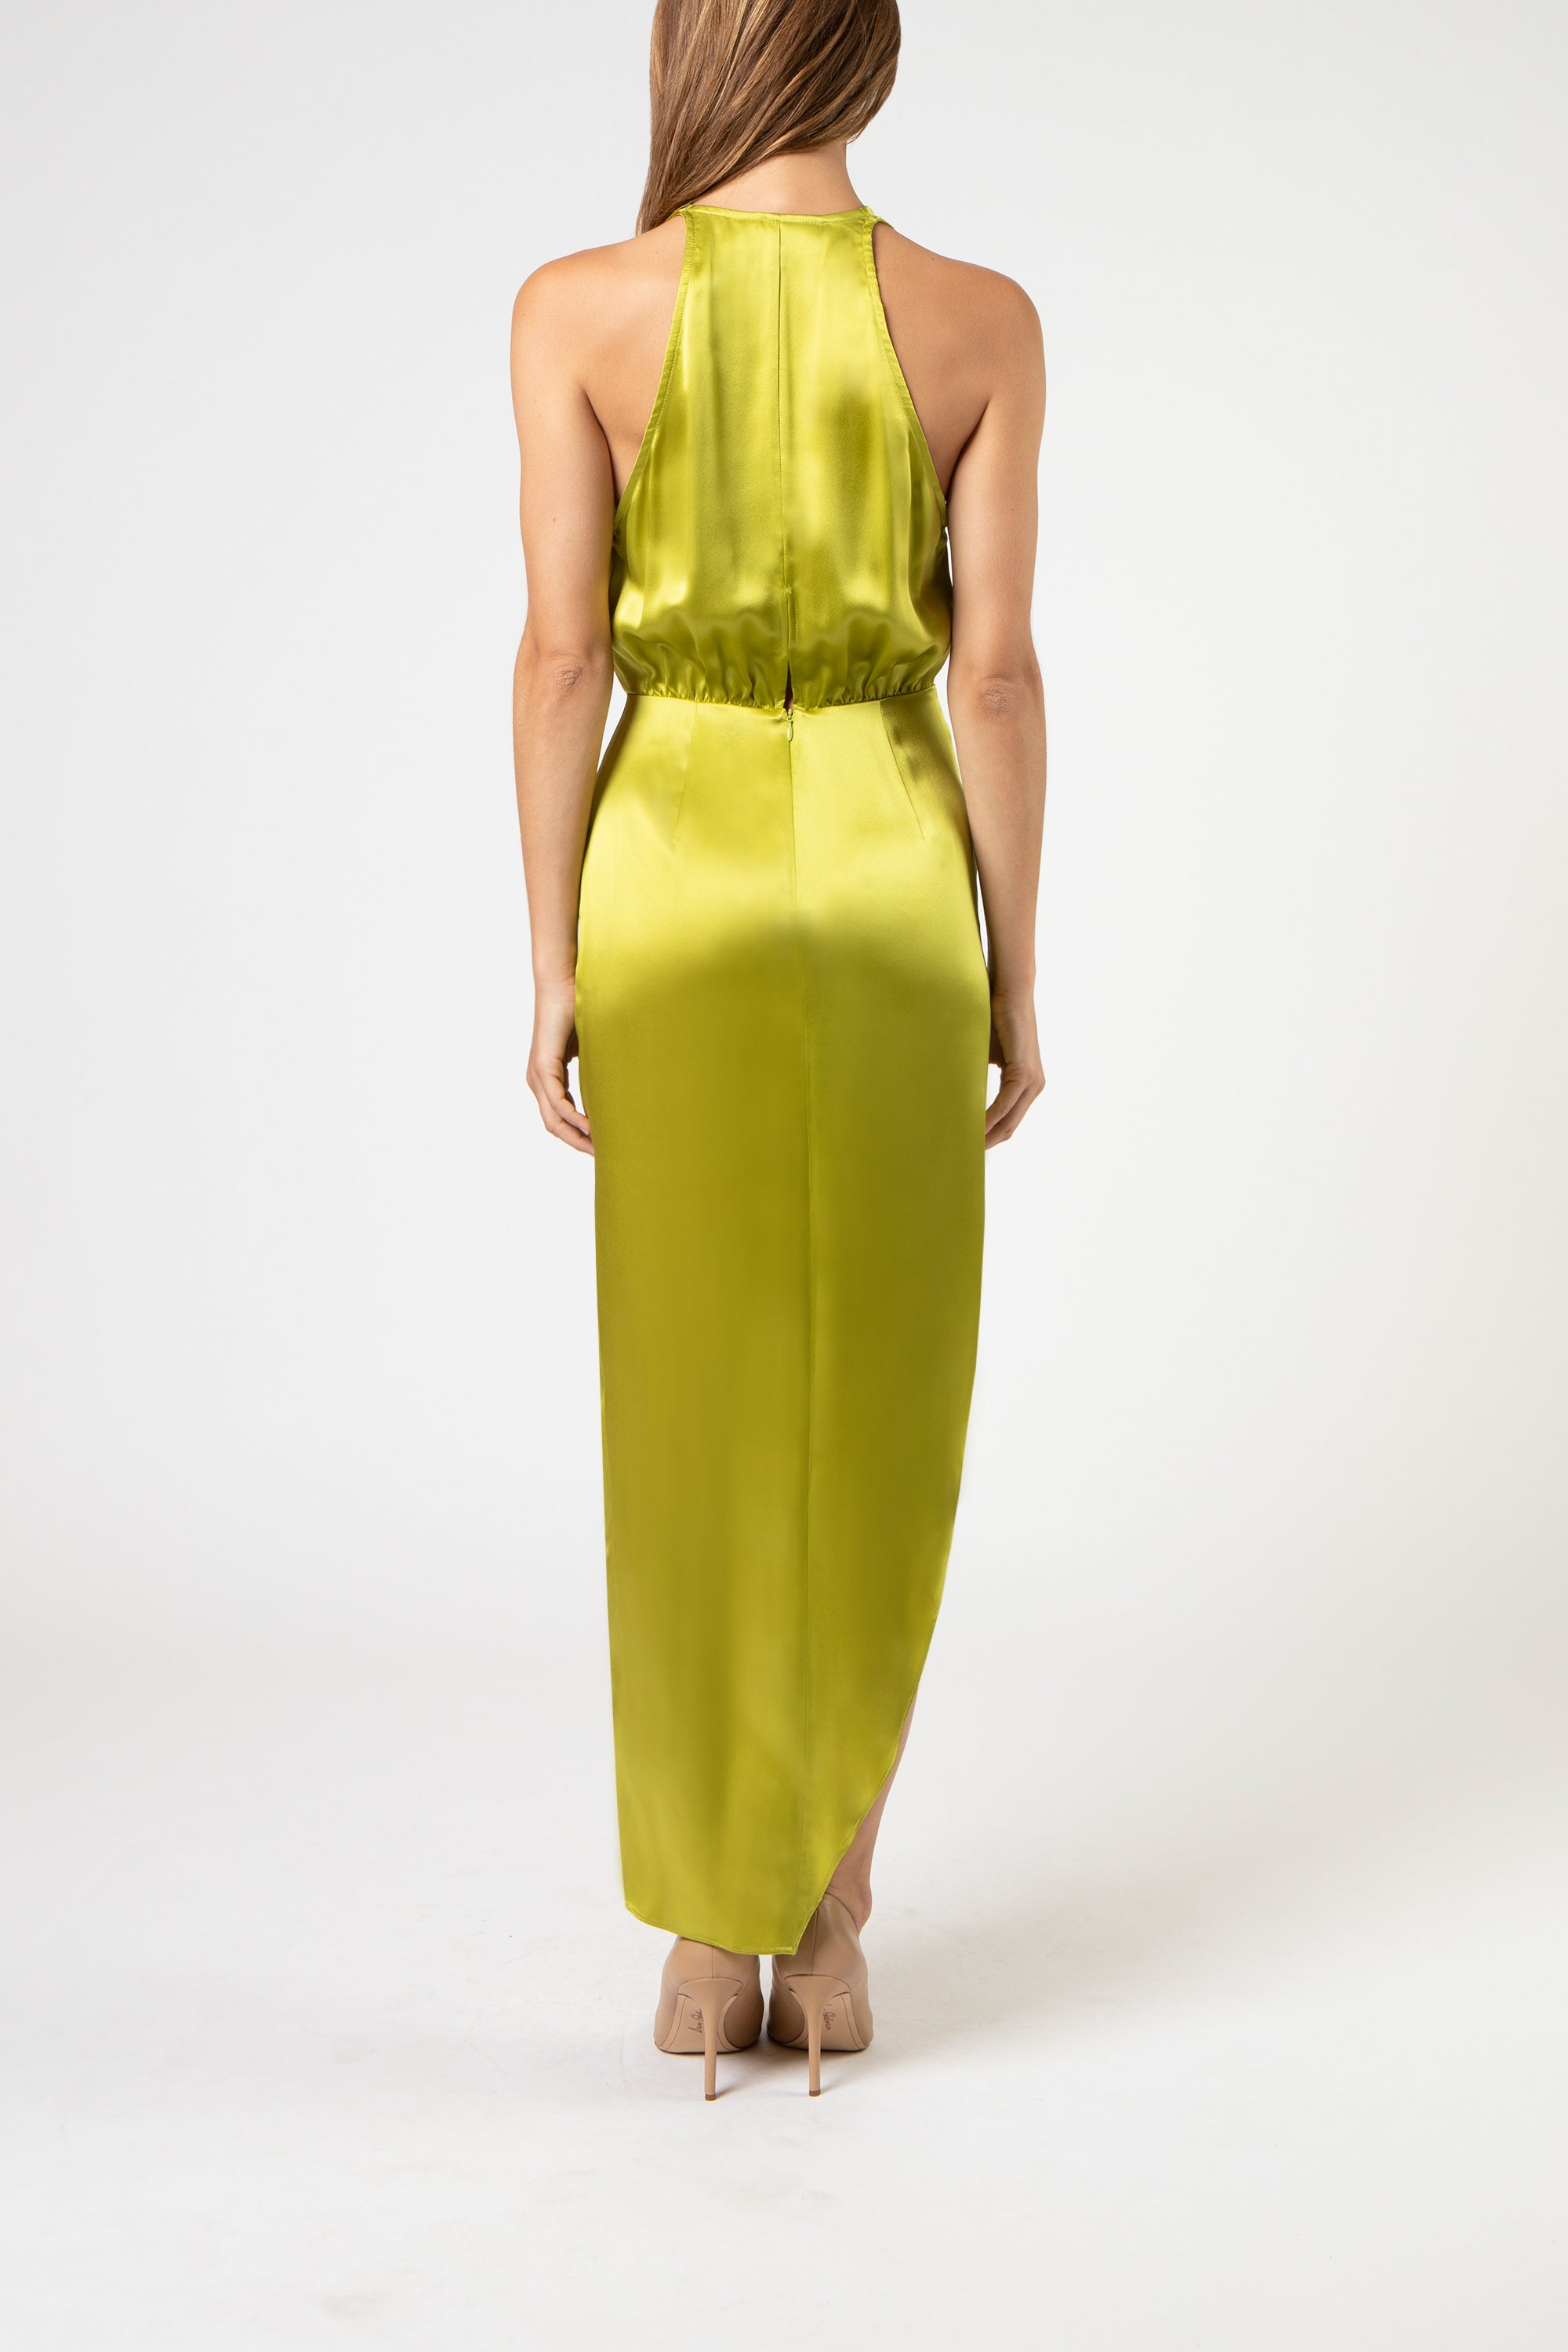 Halter draped dress - chartreuse – Michelle Mason